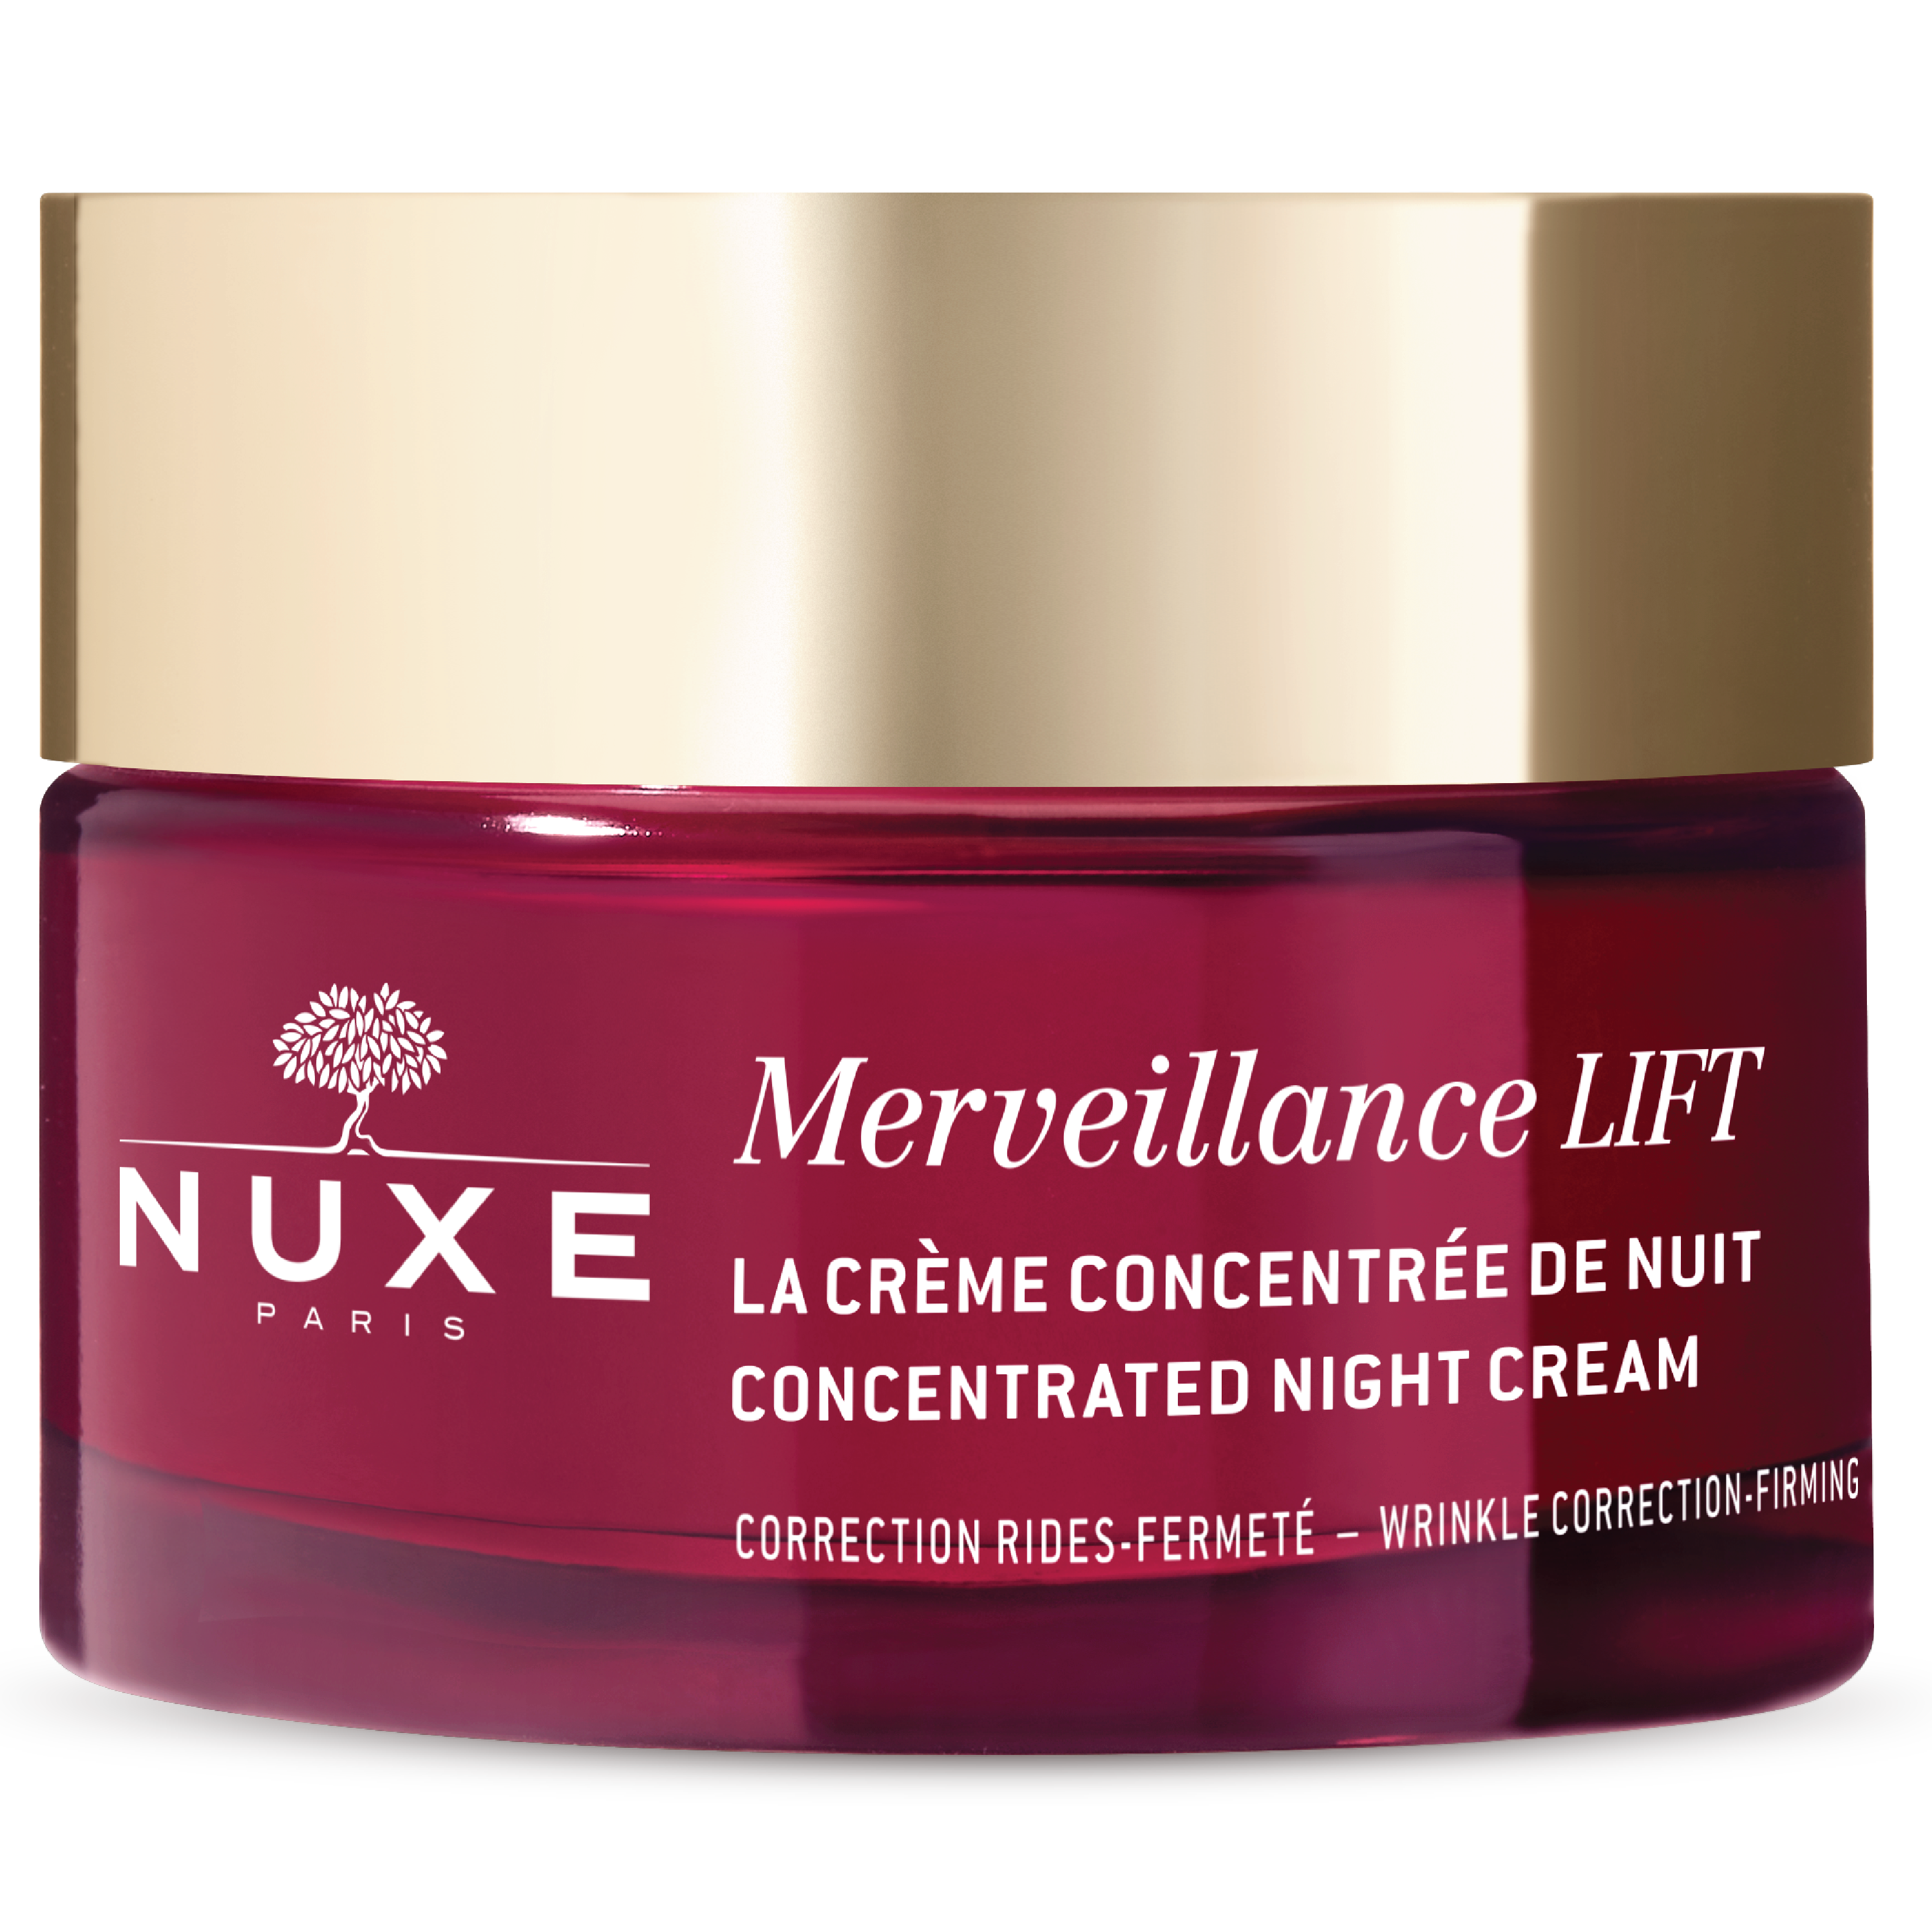 Merveillance Lift Concentrated Night Cream, 50 ml